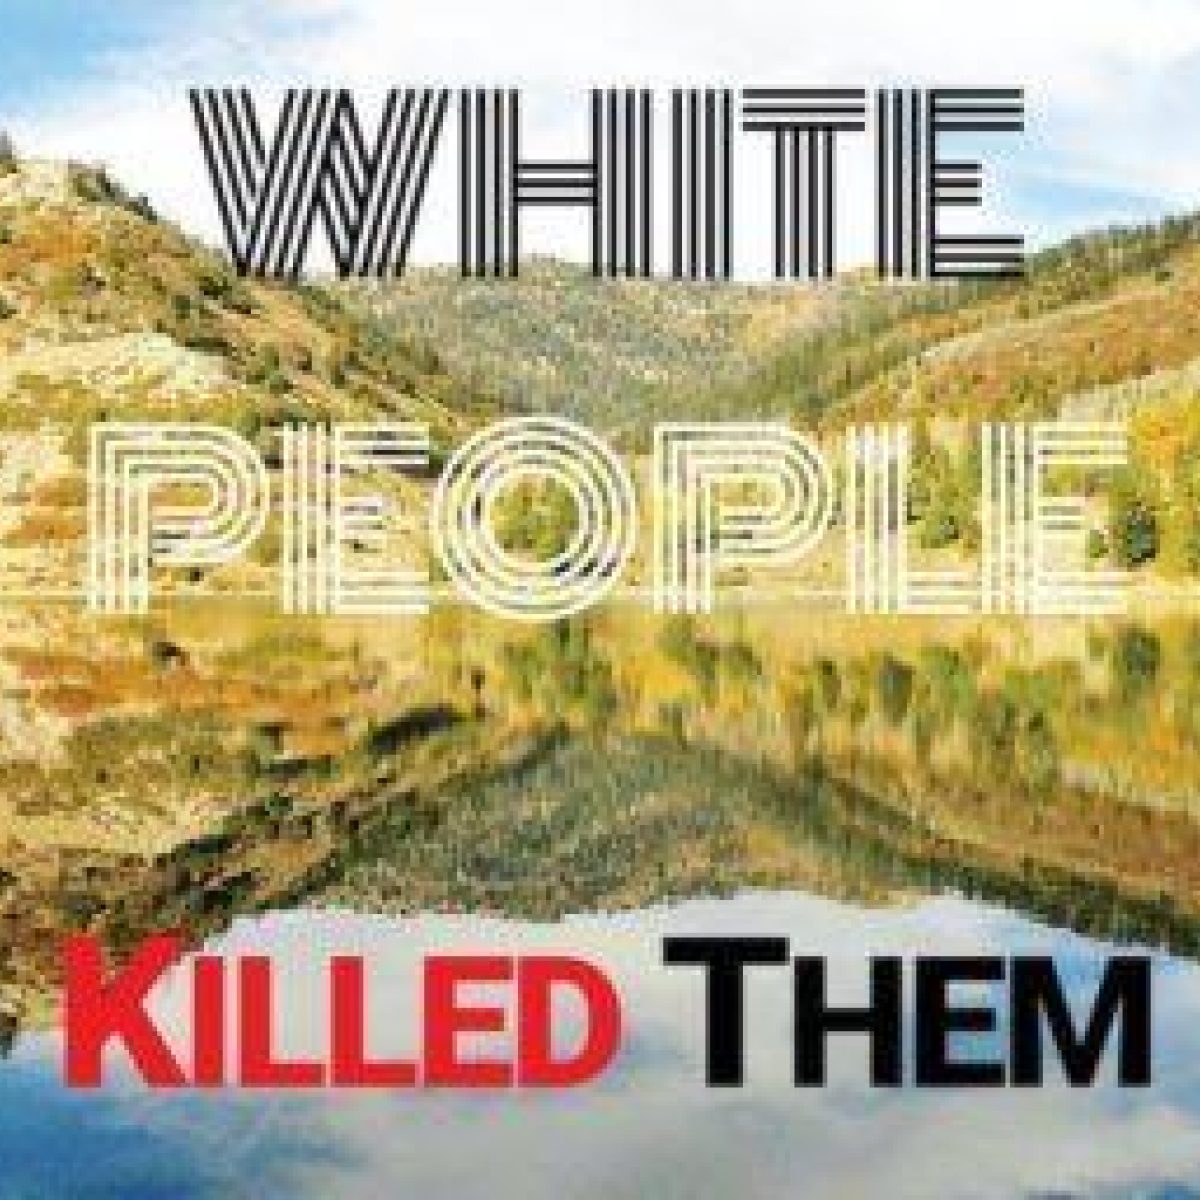 White People Killed Them